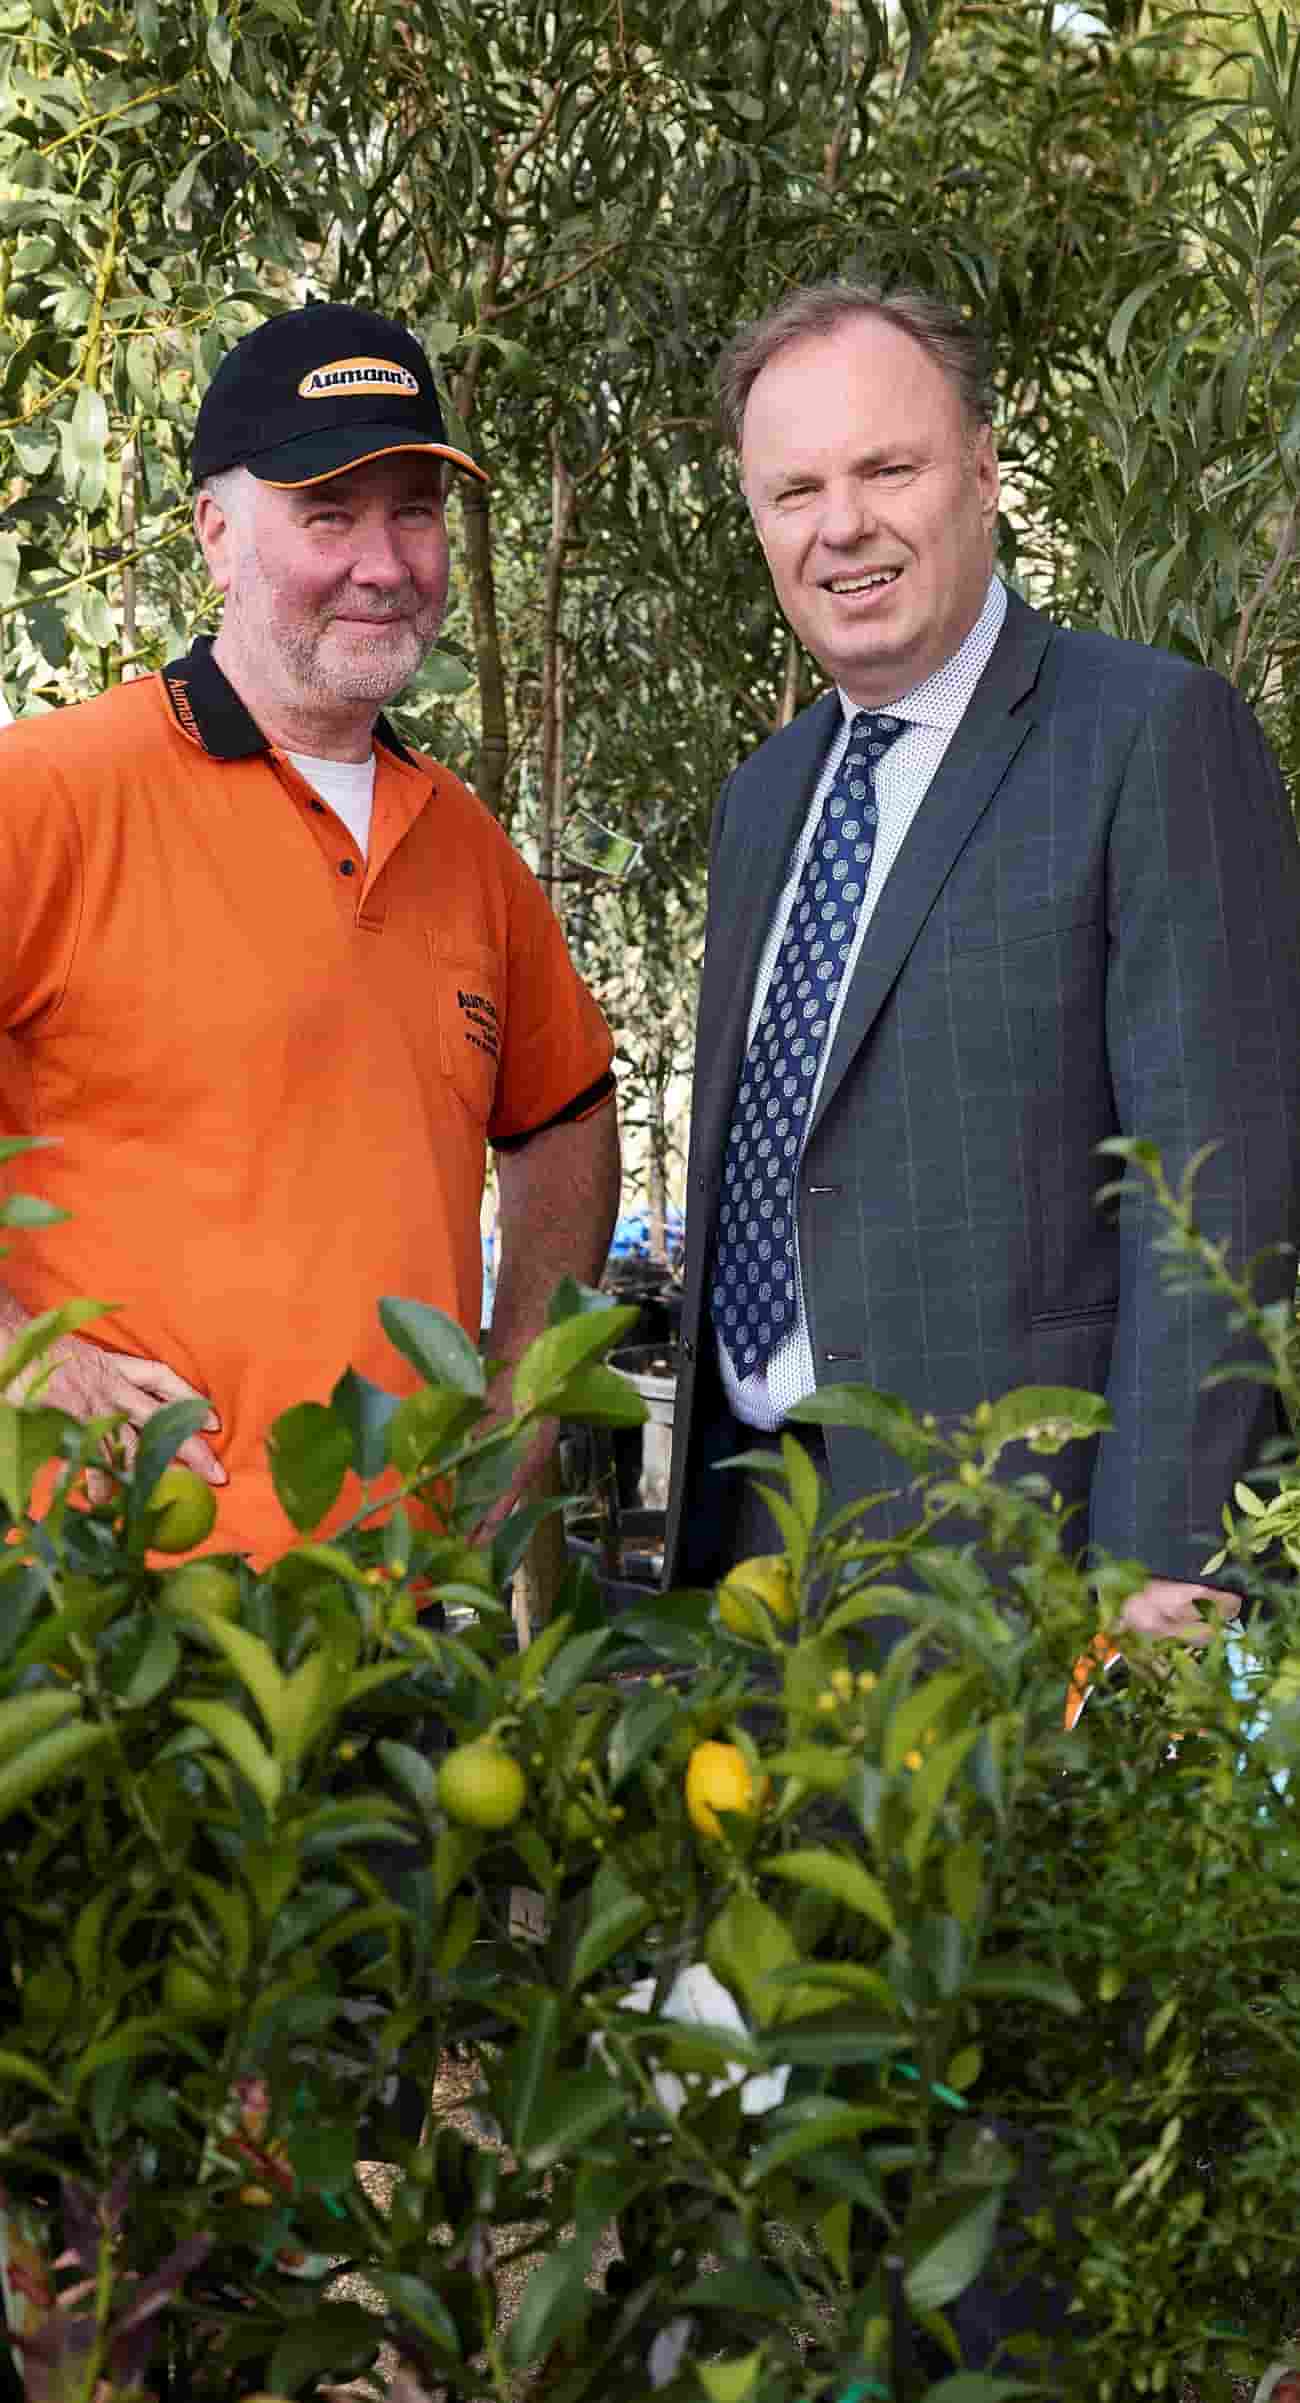 Aumann’s Building and Garden Supplies Andrew Mackintosh standing with their business banker Steve uit den Bogaard